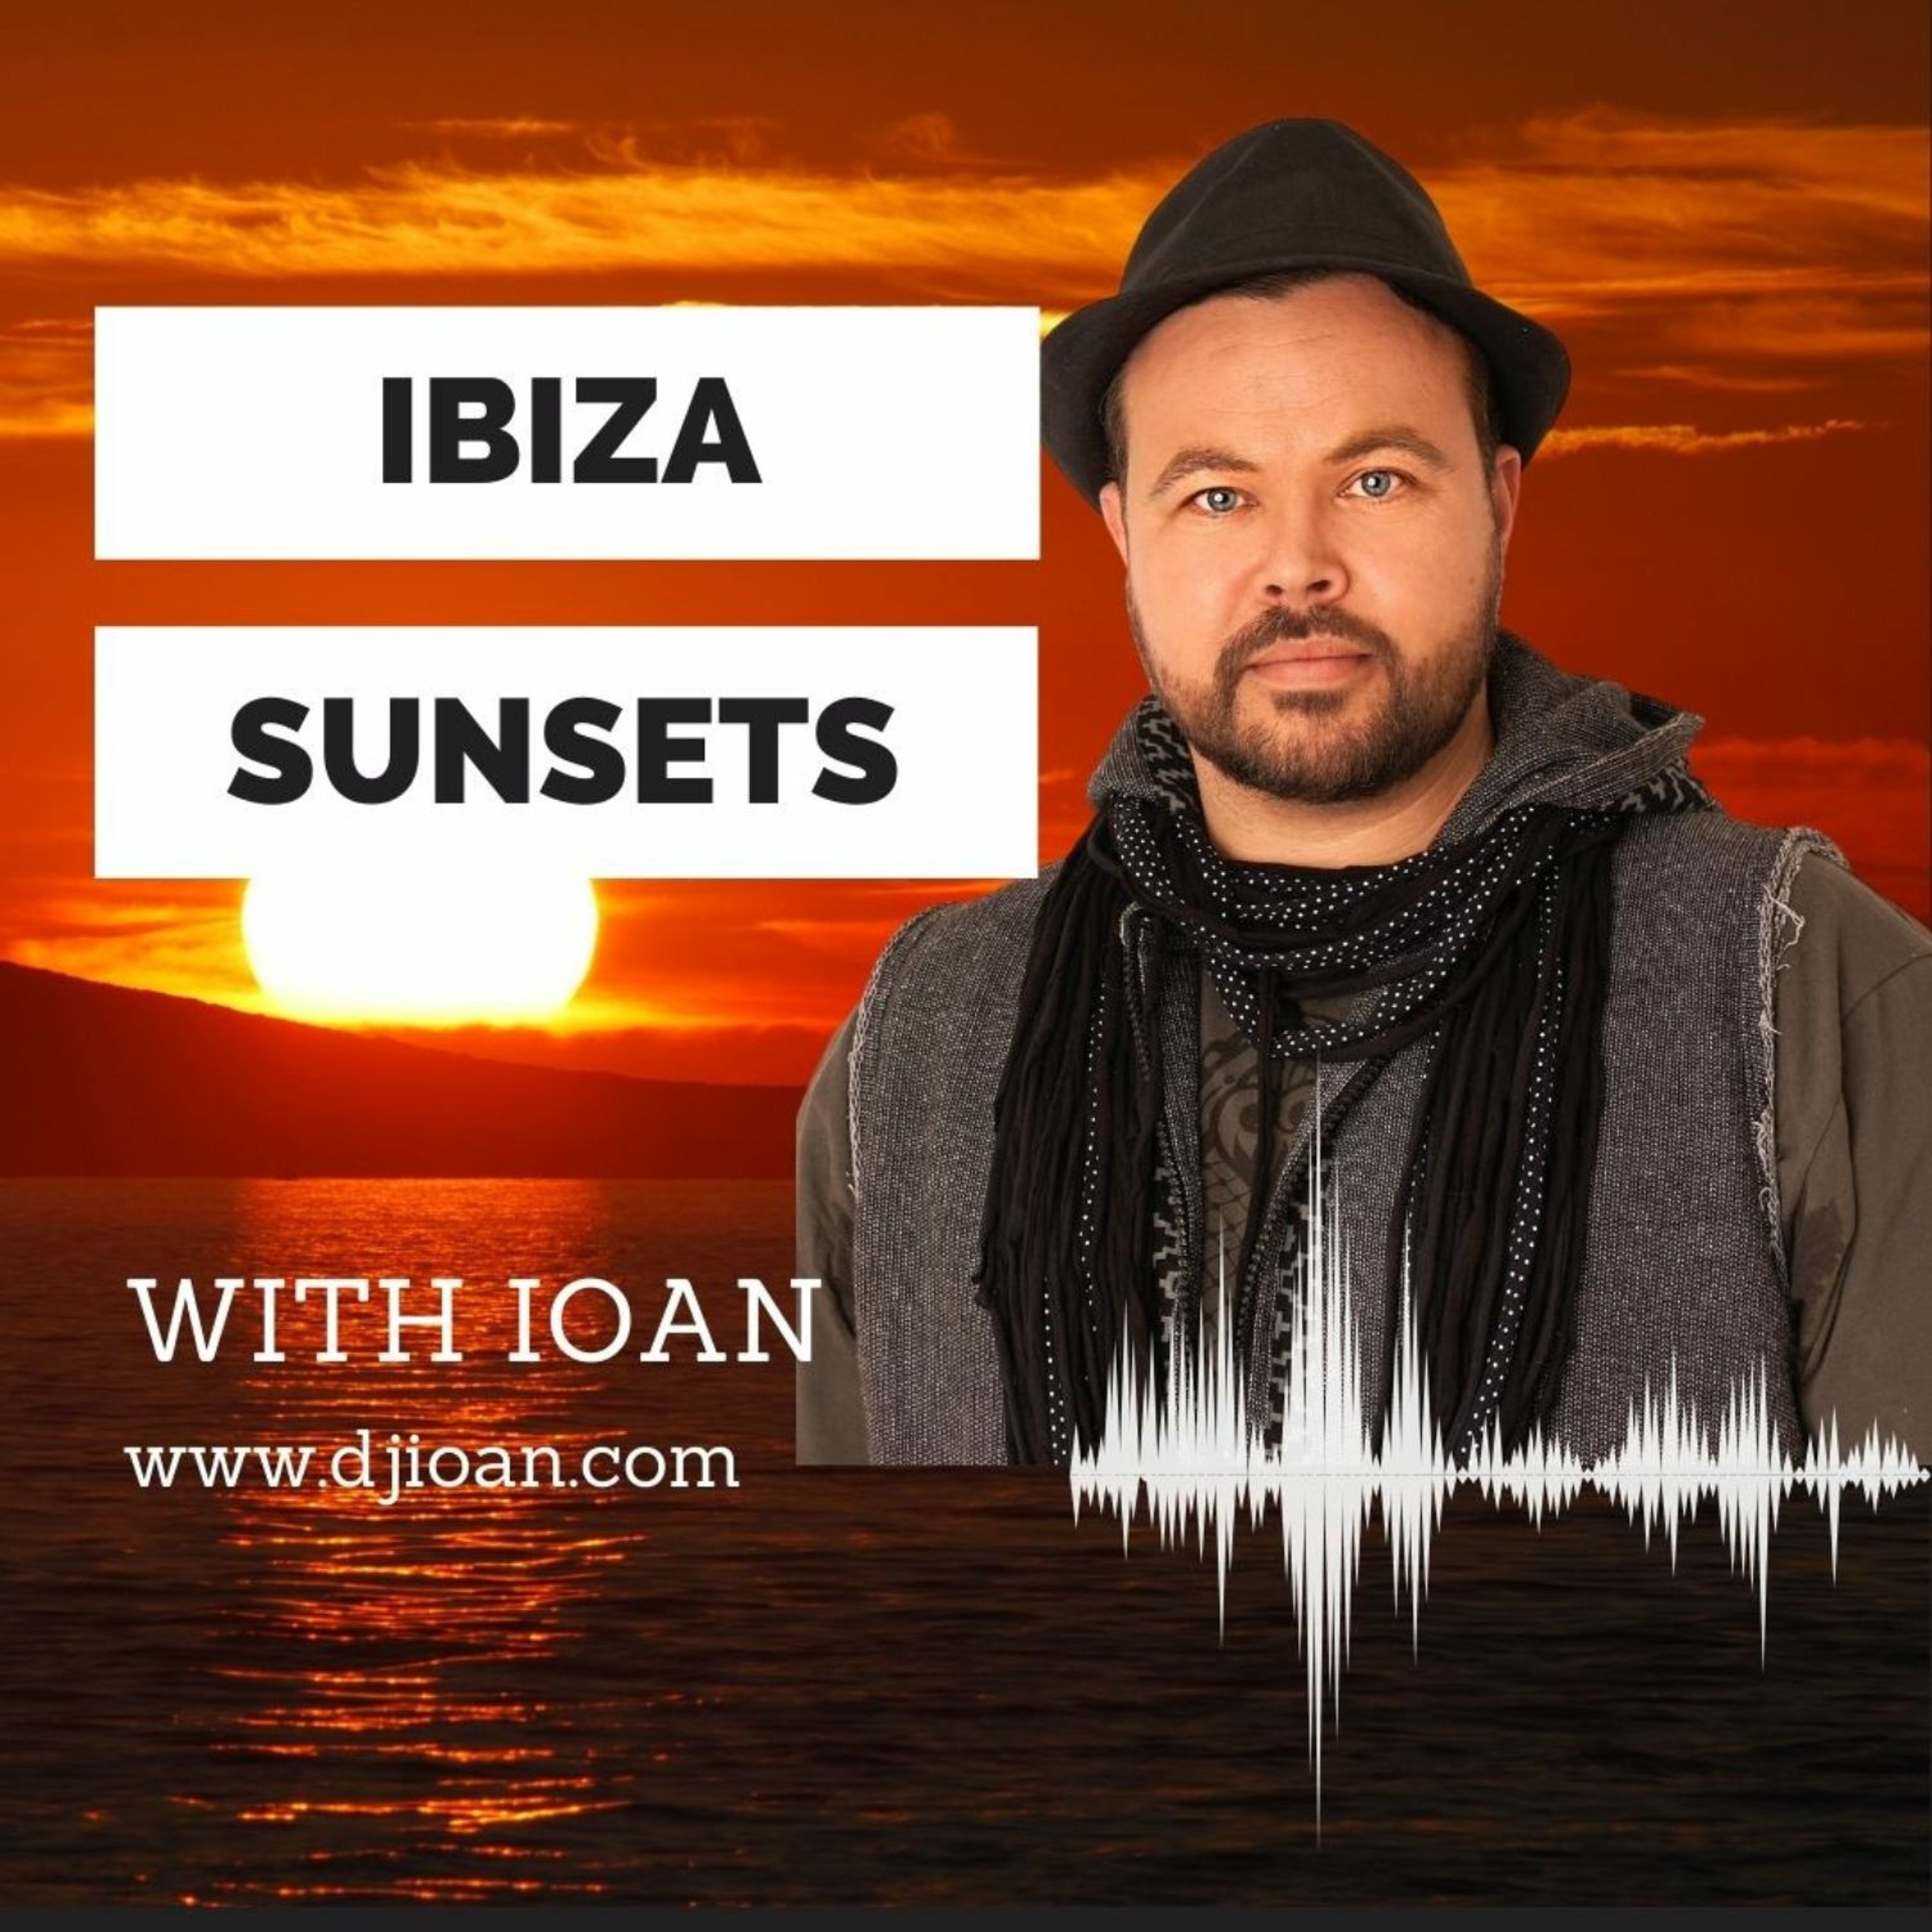 #079 IbizaSunsets with Ioan [www.djioan.com]